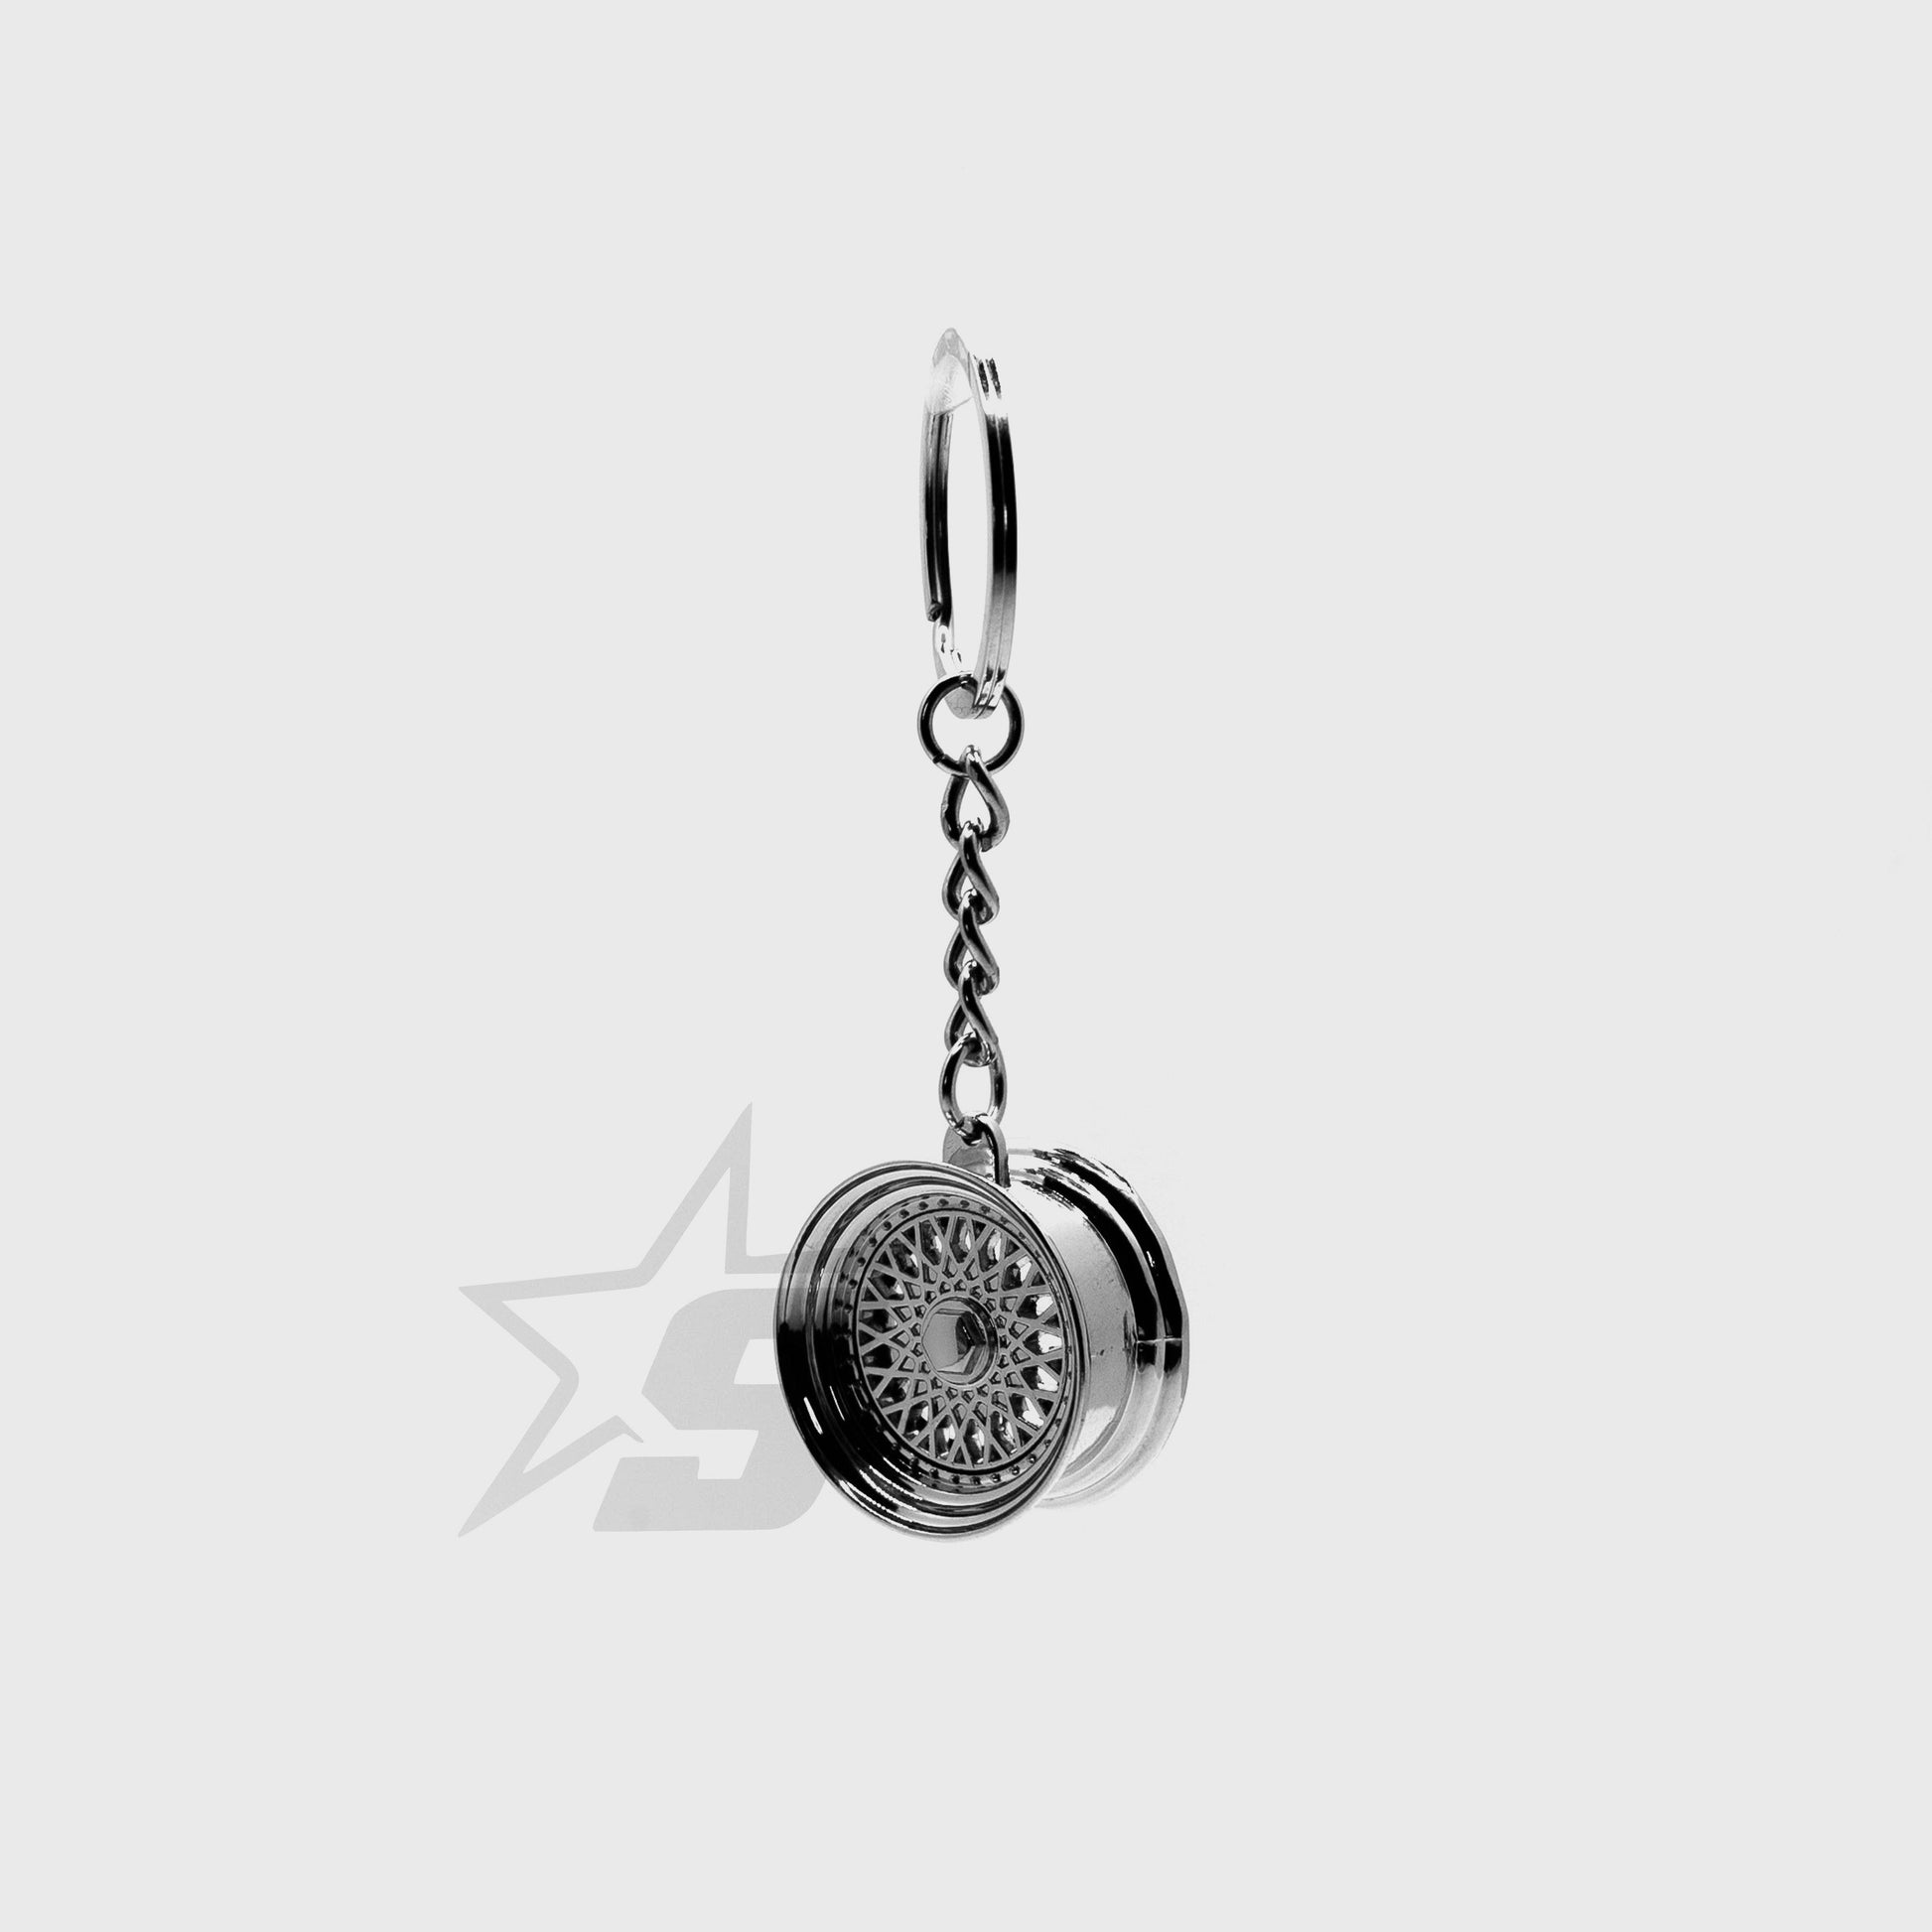 BBS | SUPER RS Brilliant Silver Keychain